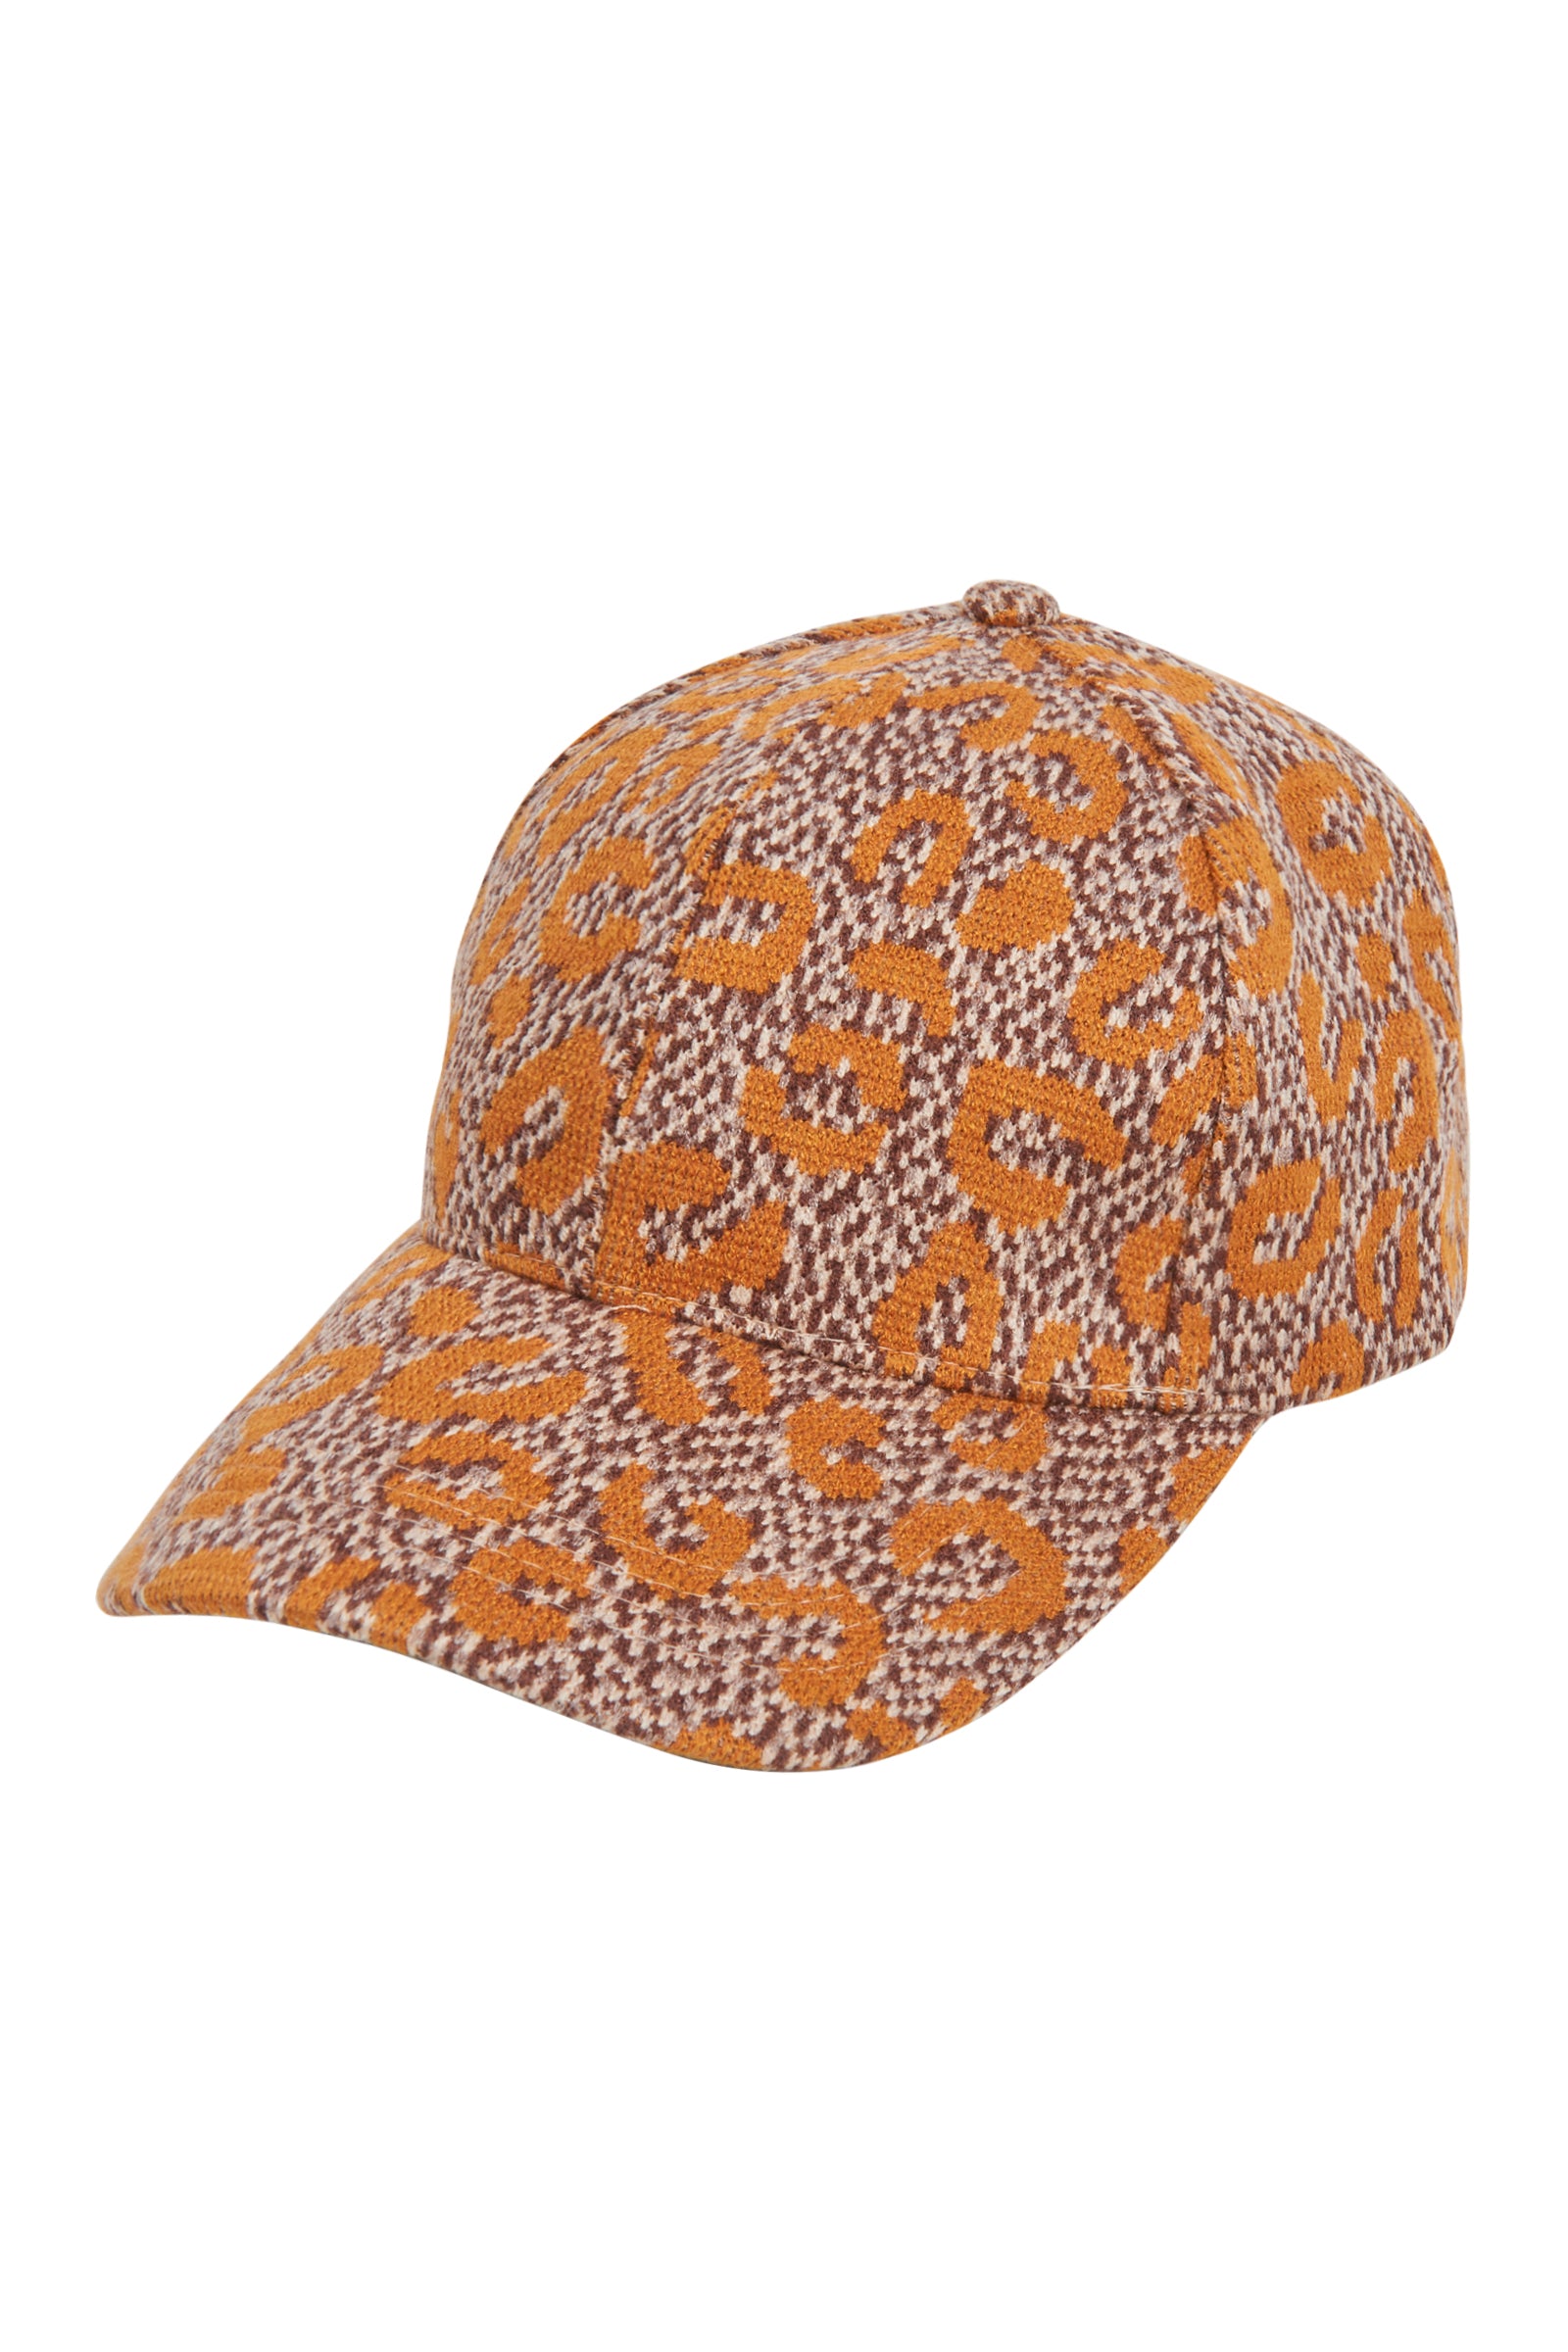 Pilbara Cap - Ochre - eb&ive Hat